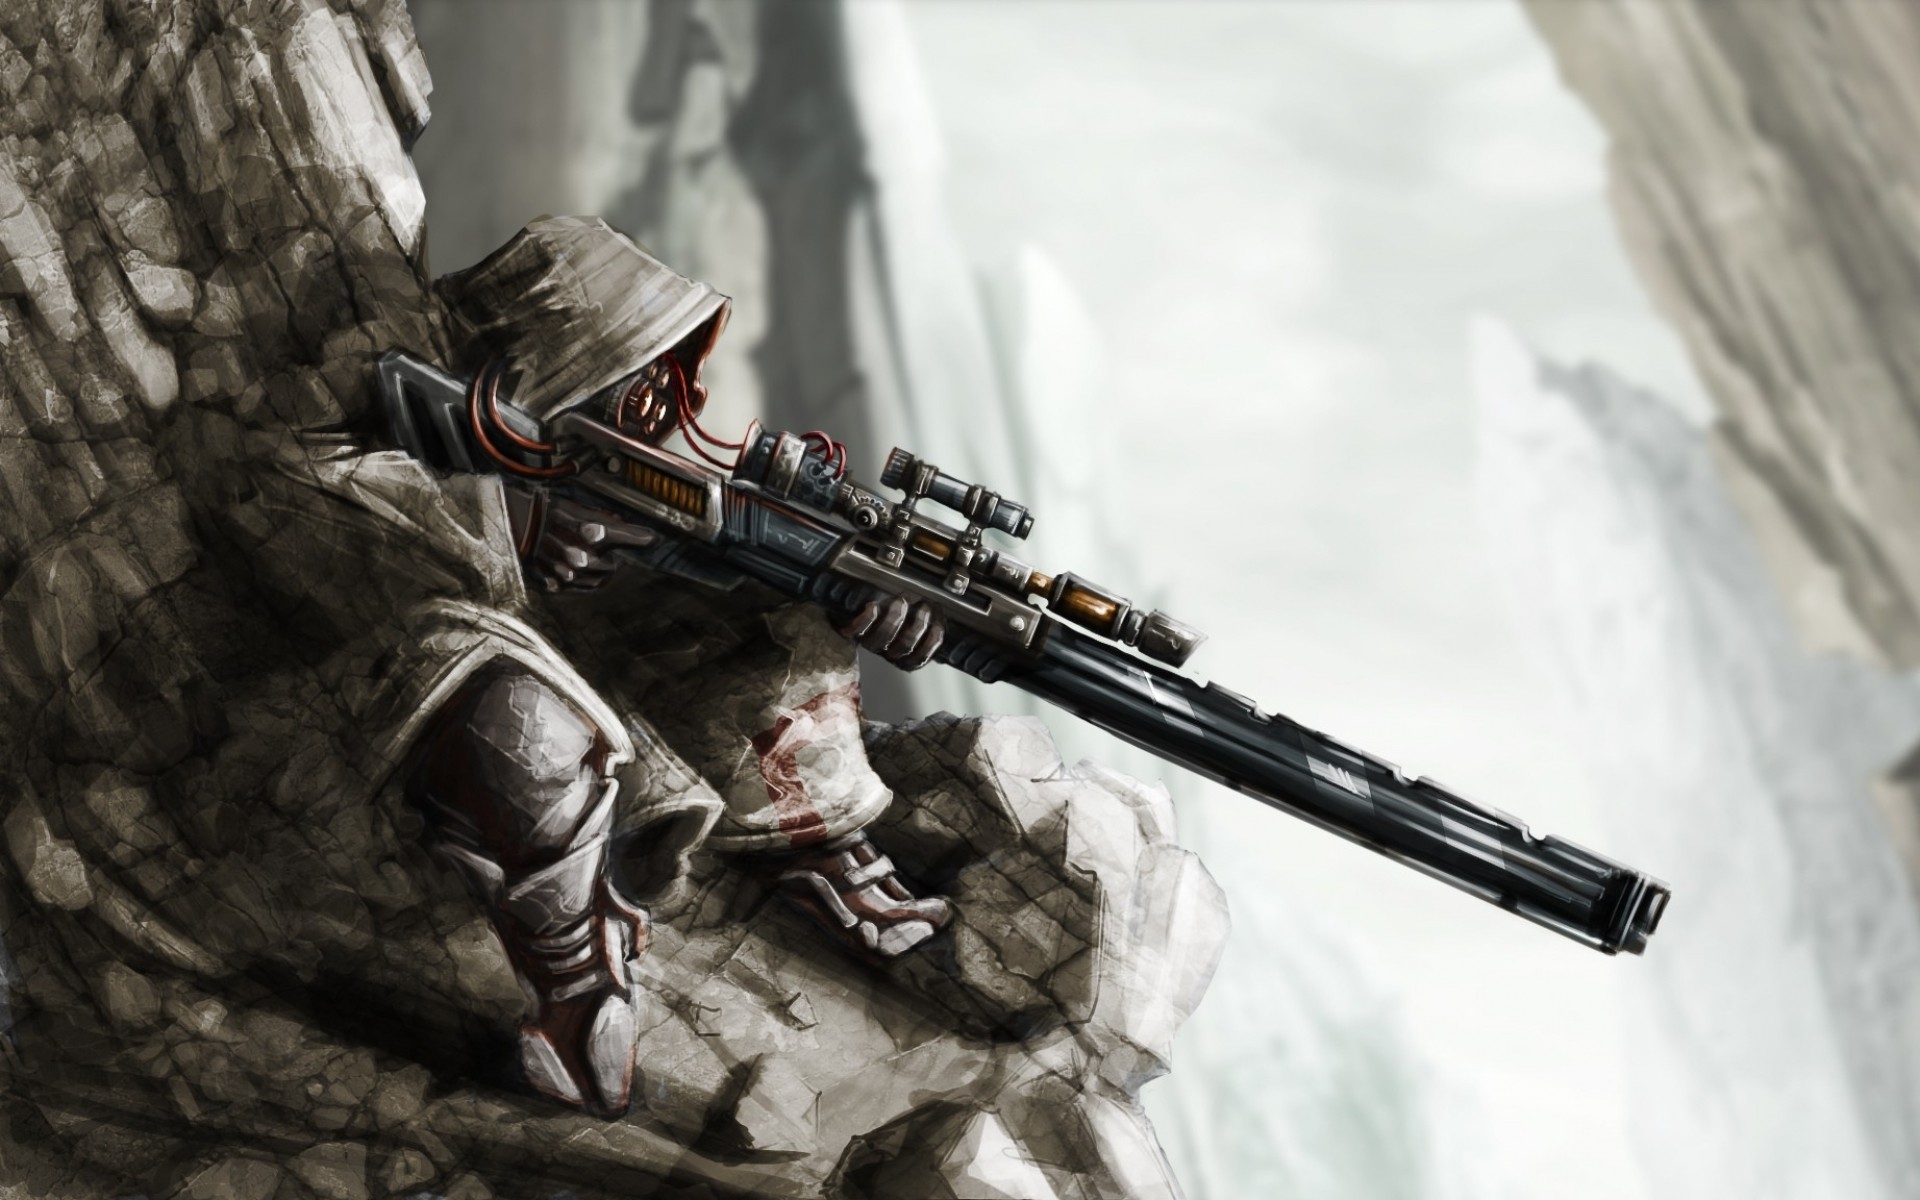 Anime fantasy sniper warrior soldier weapons guns rifle scope